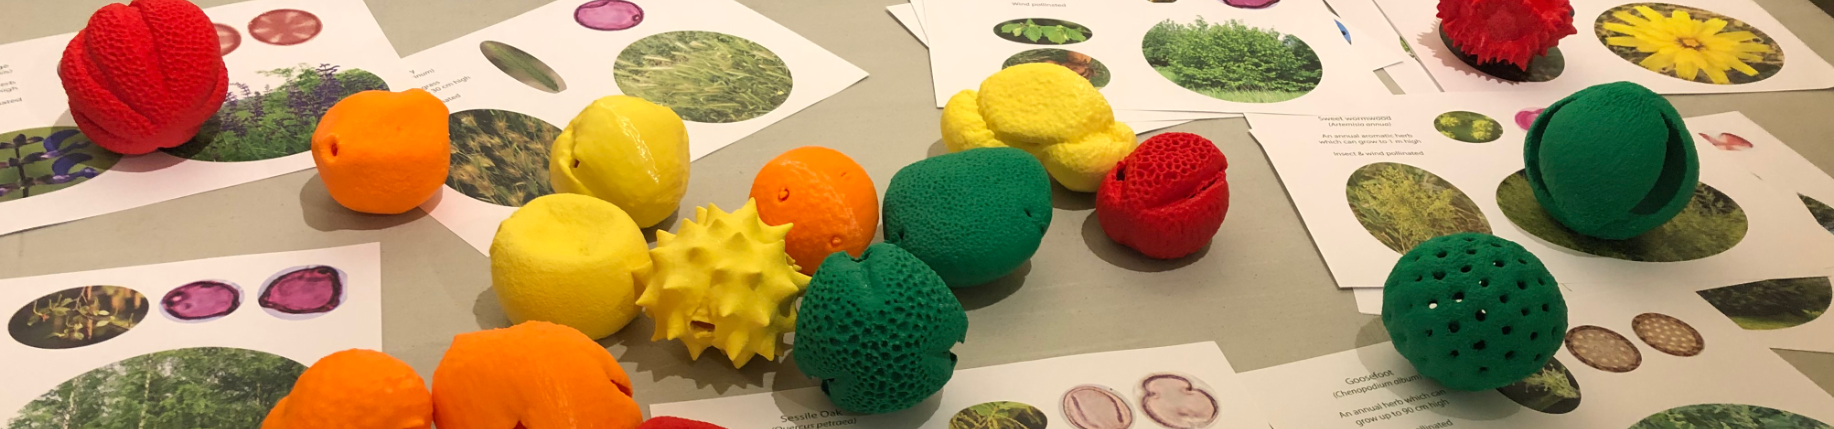 Pollen 3D prints confocal microscopy z-stacks Oliver Wilson